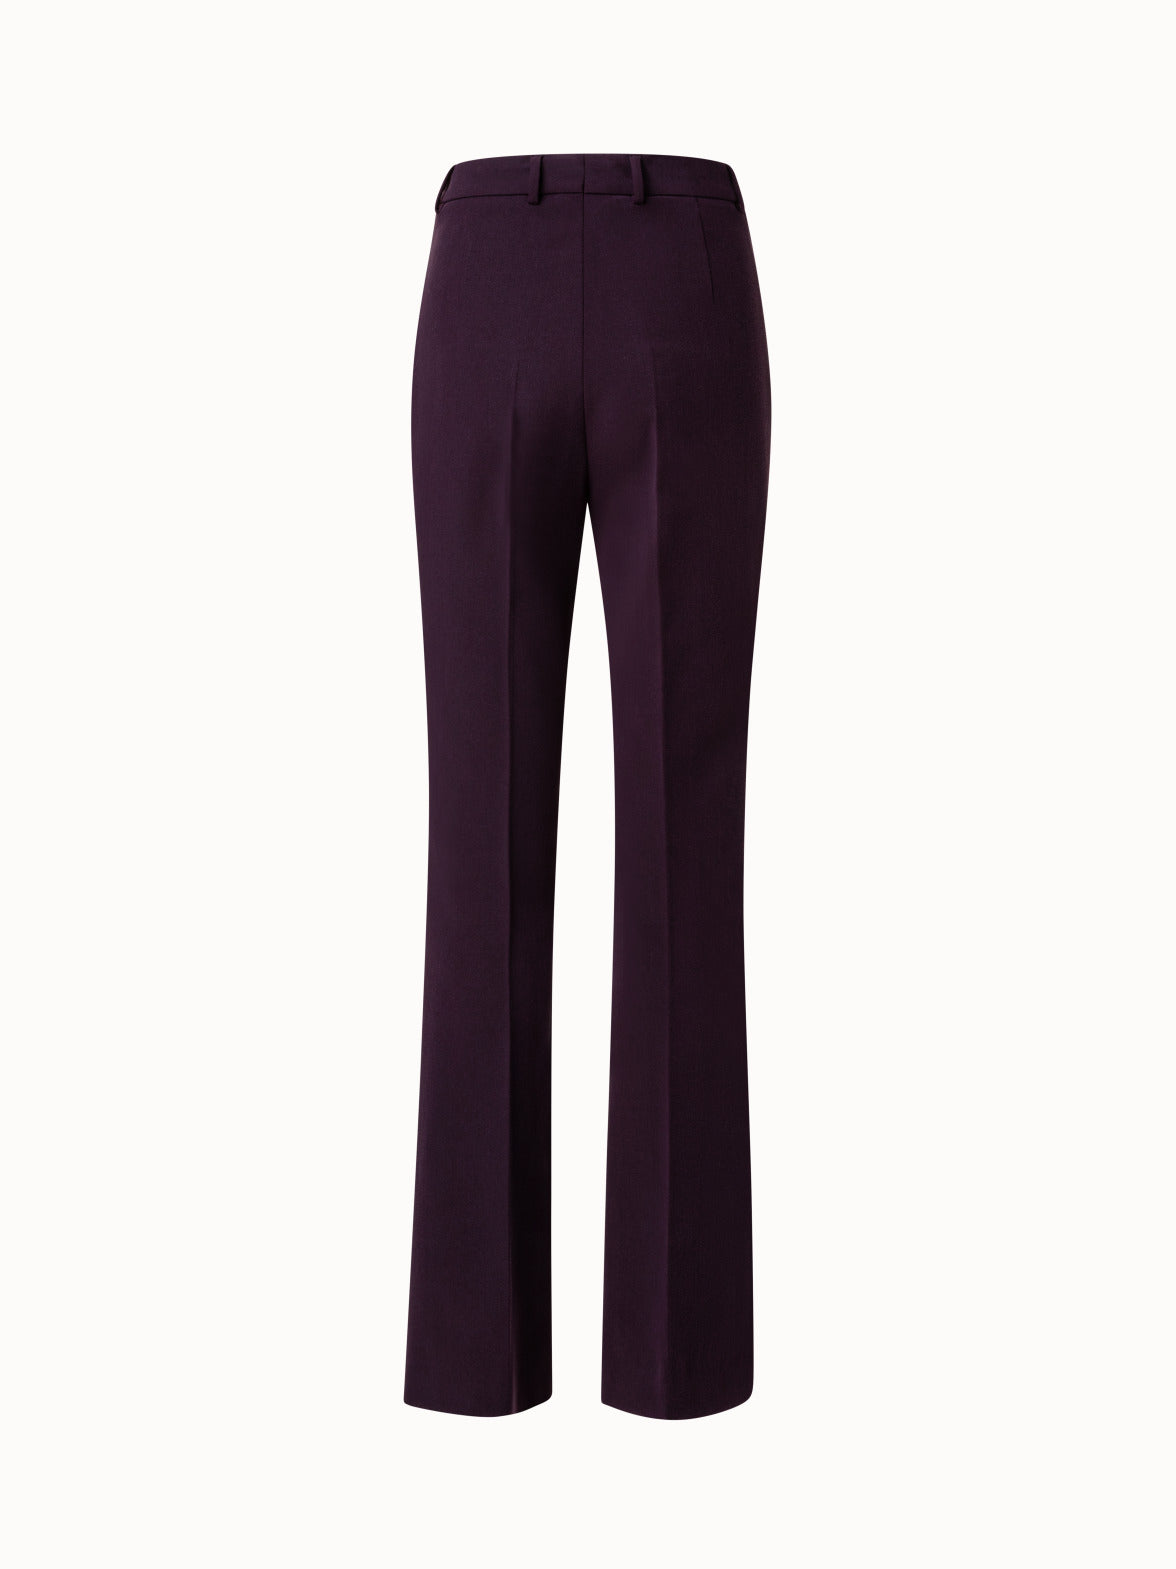 Buy BLACKBERRY'S URBAN Grey Mens 4 Pocket Stripes Trousers | Shoppers Stop